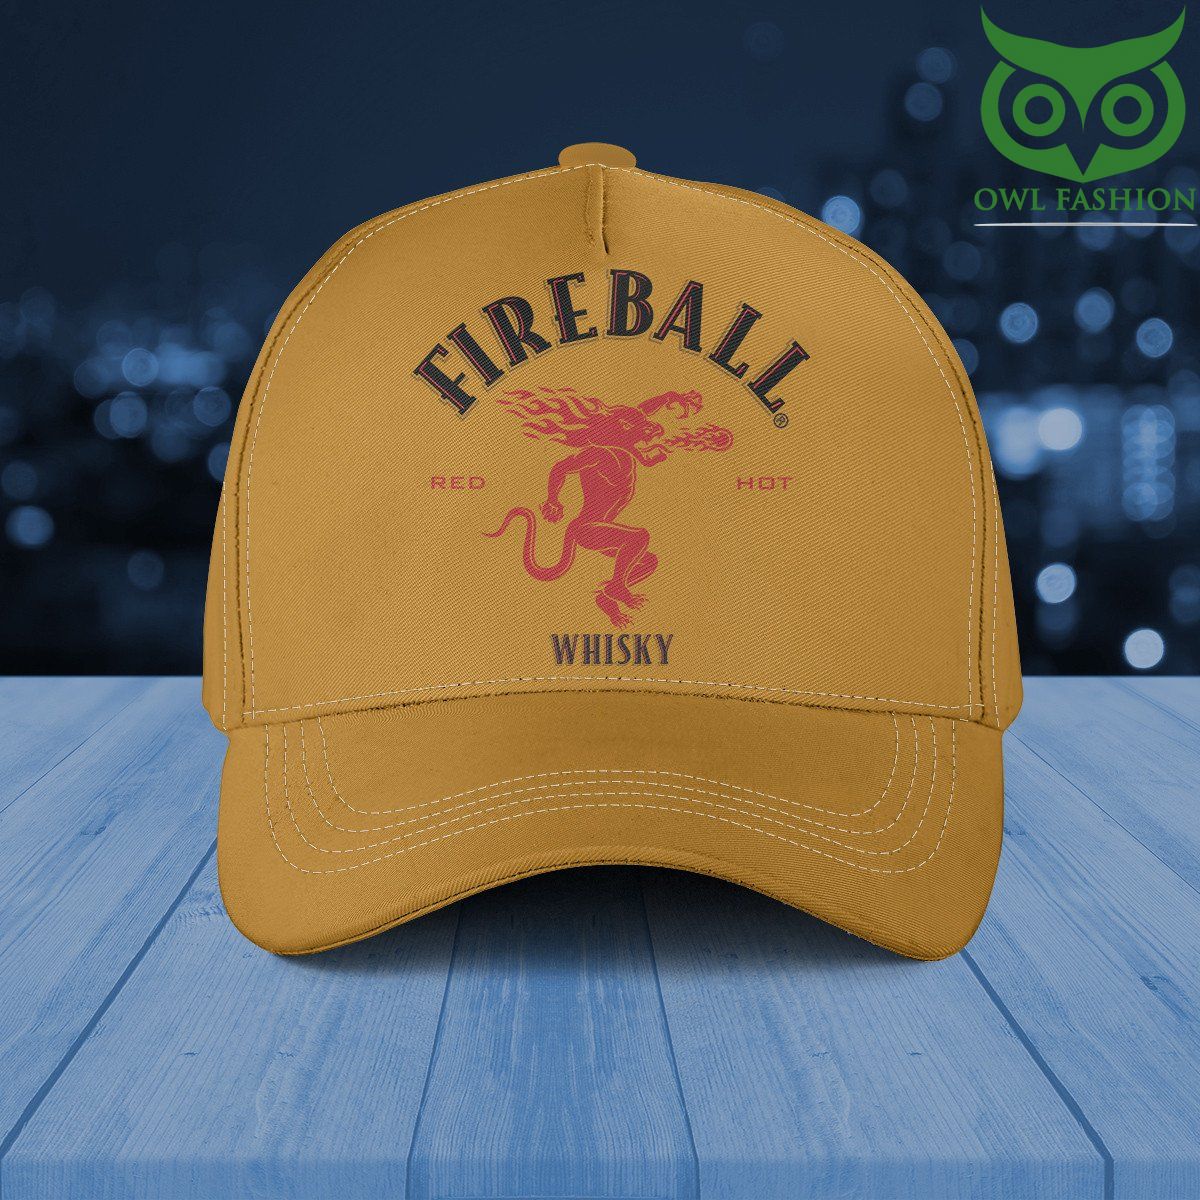 Fireball red hot whisky Baseball Cap 